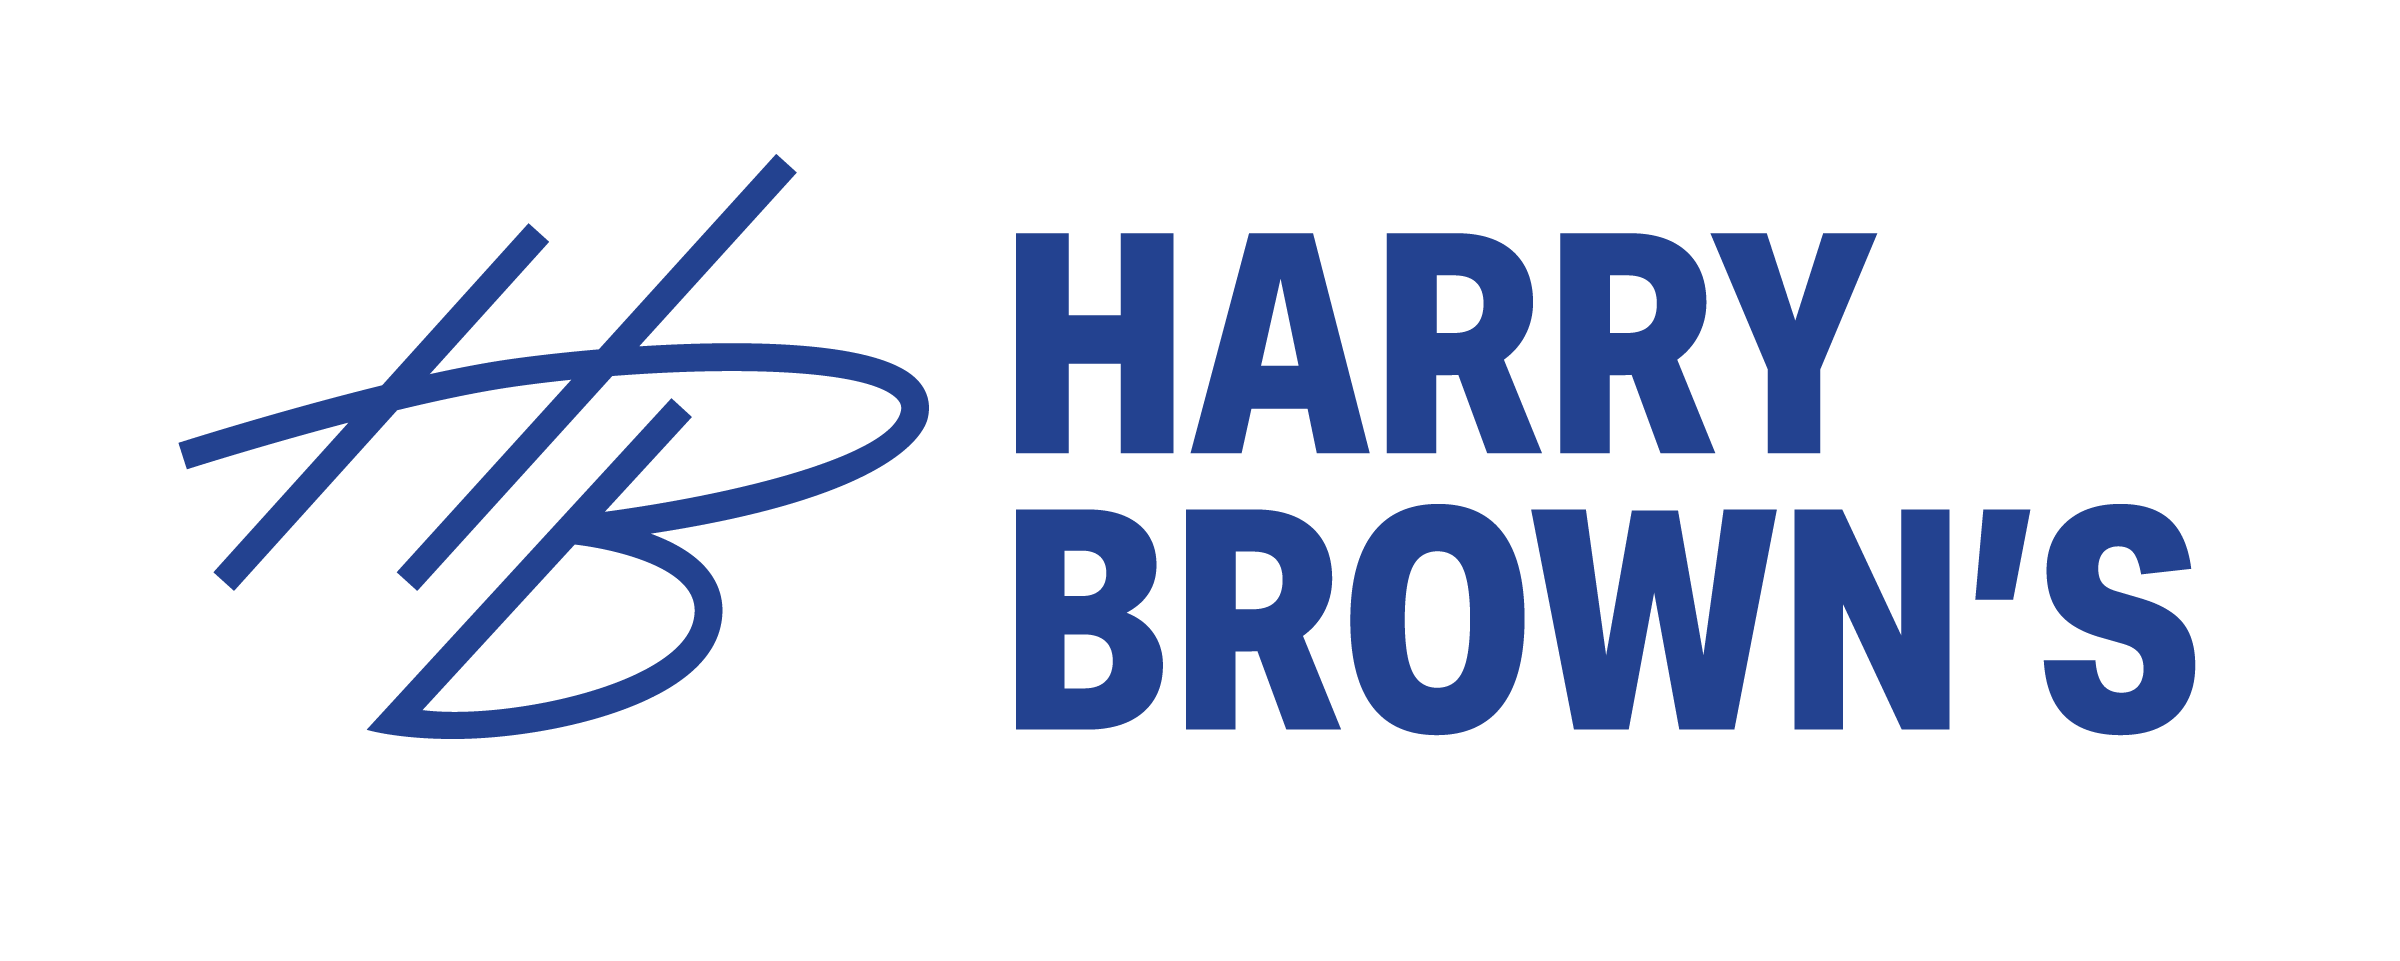 Harry Brown's logo